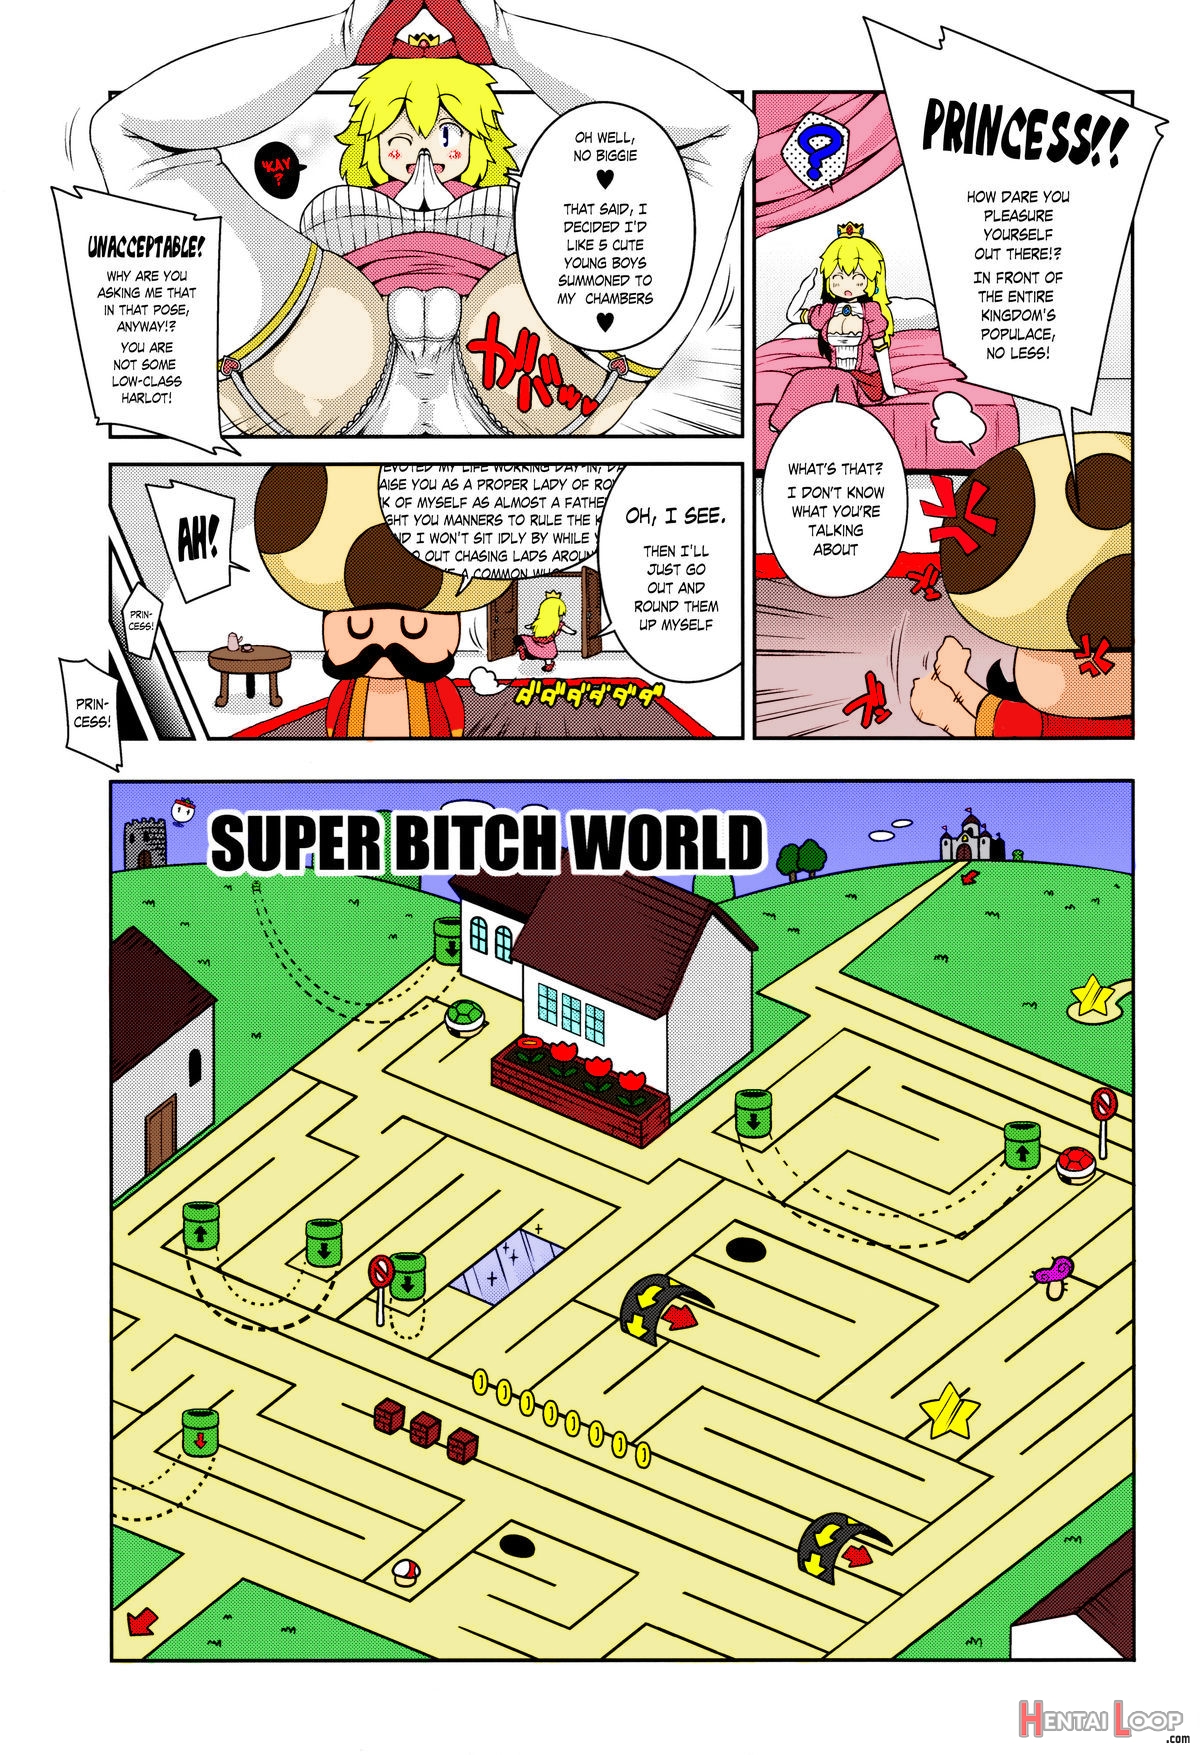 Super Bitch World – Colorized page 6